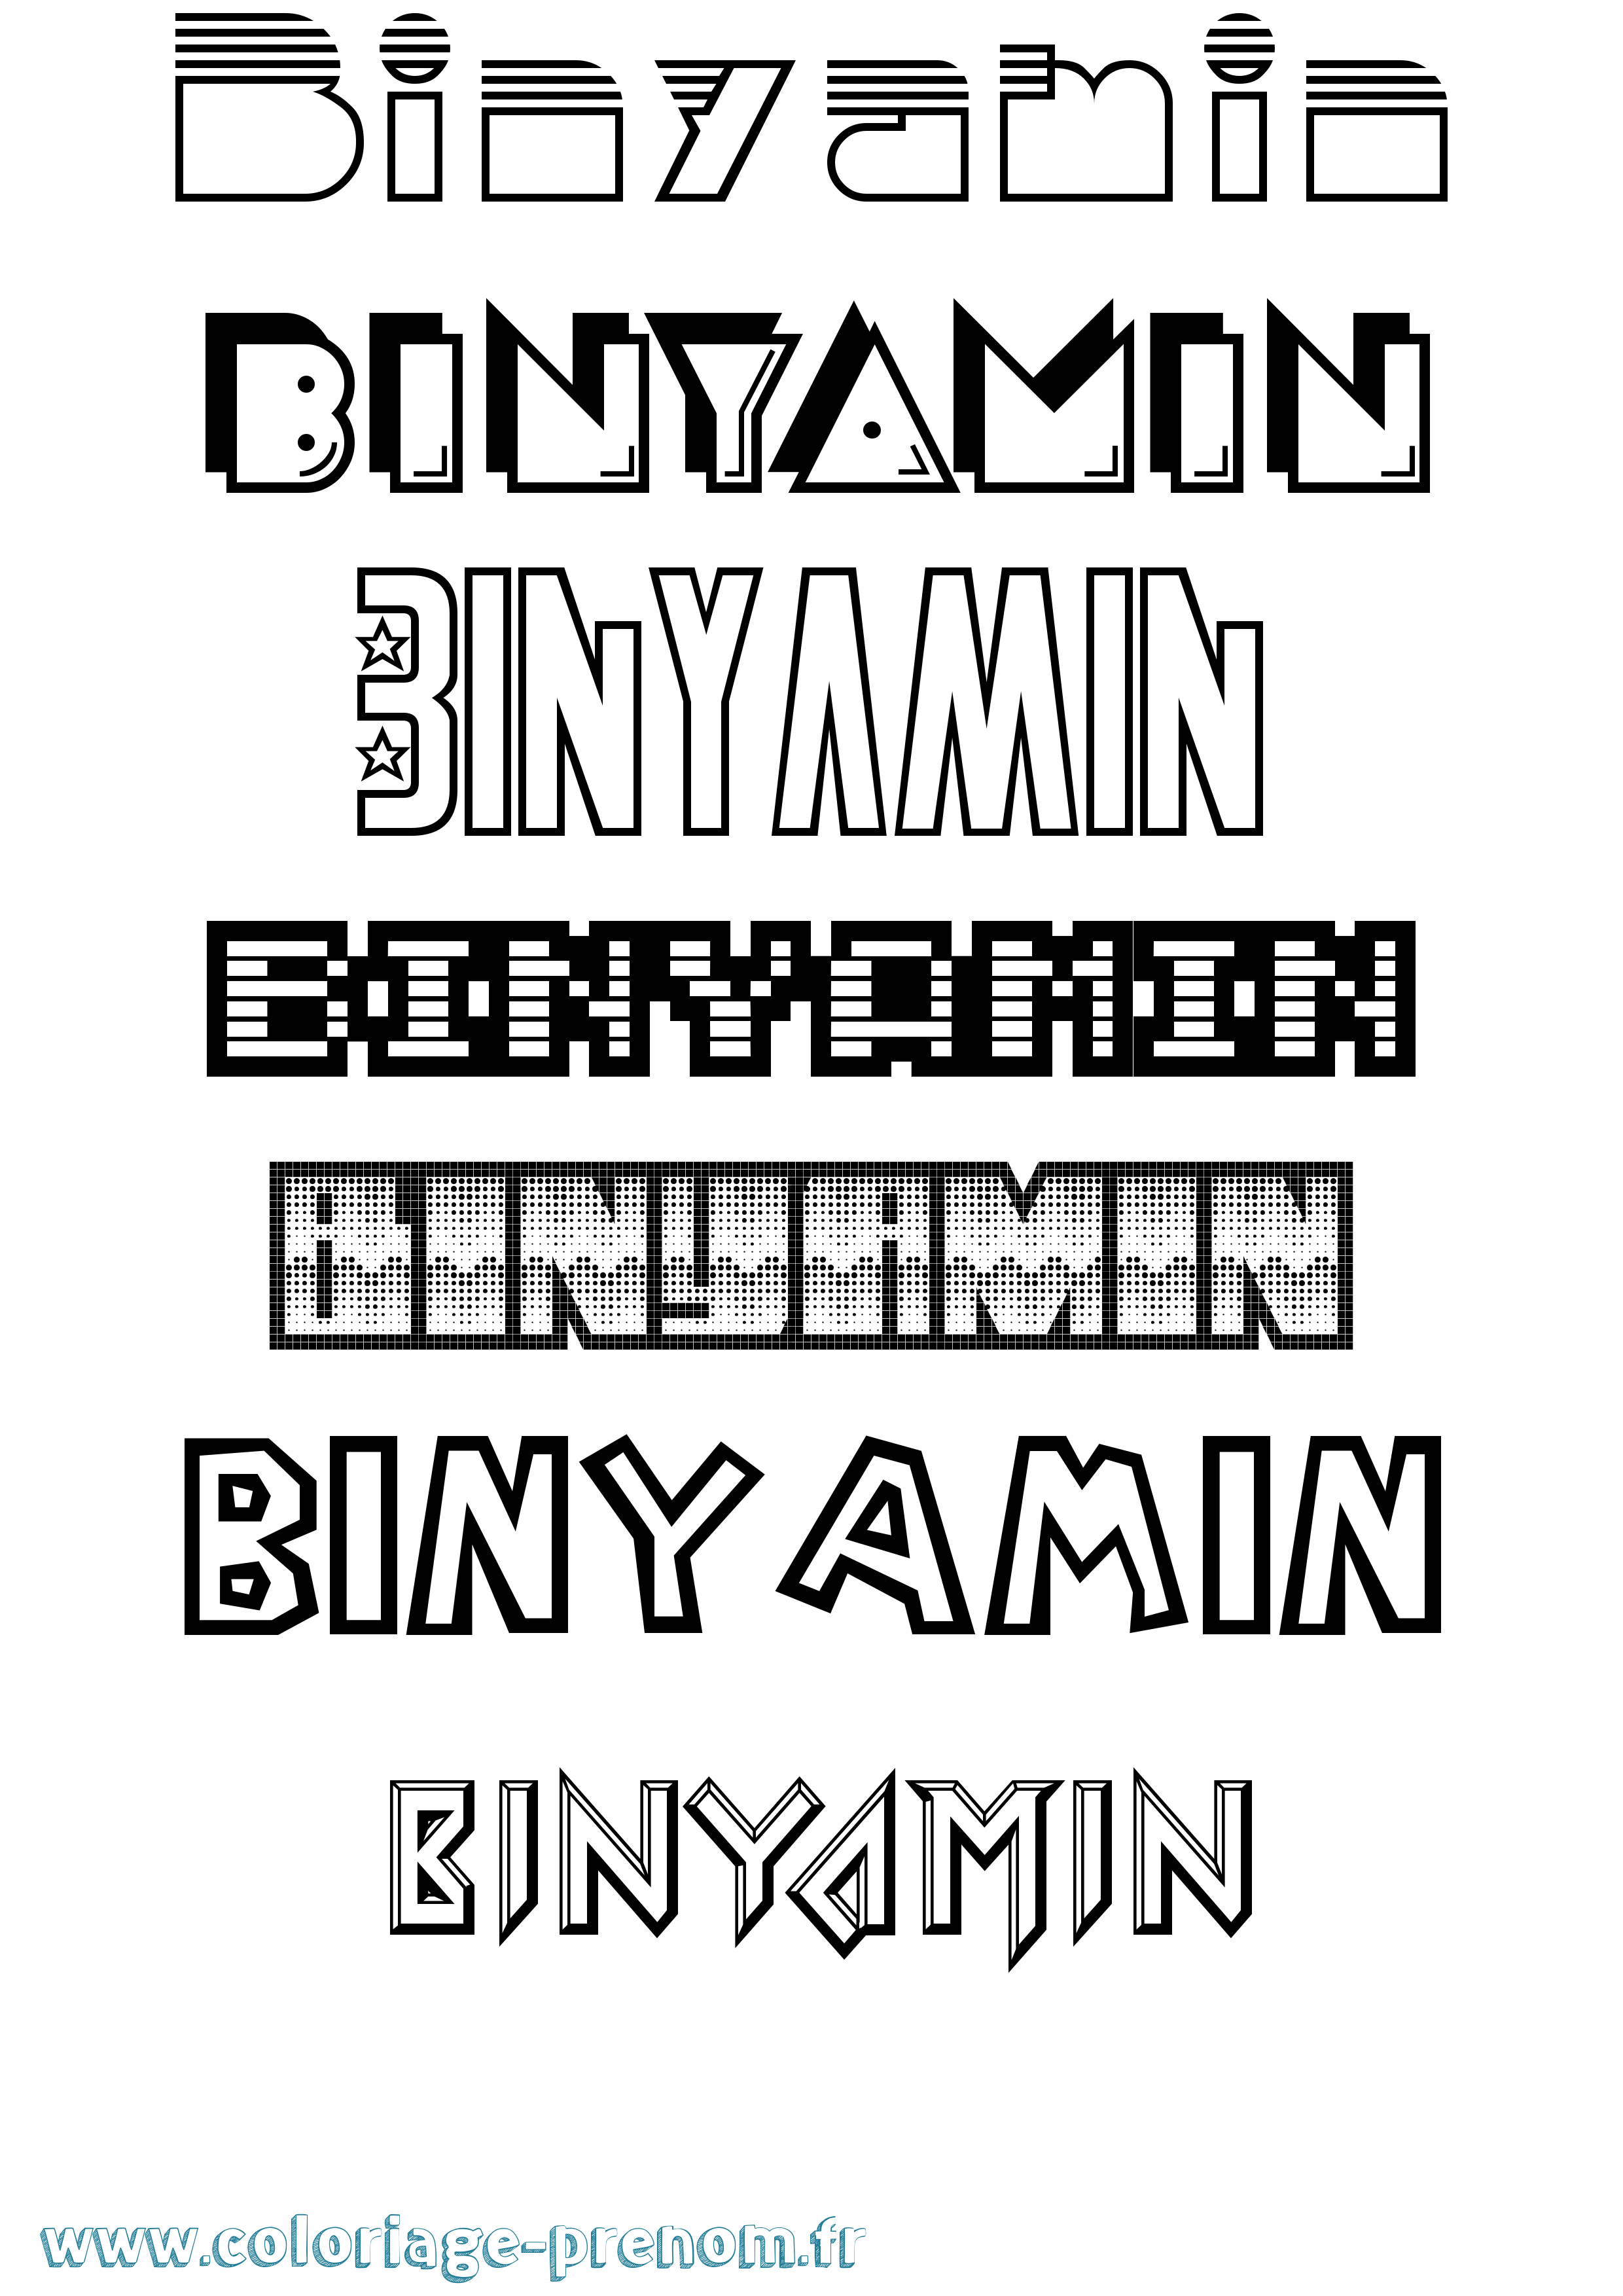 Coloriage prénom Binyamin Jeux Vidéos